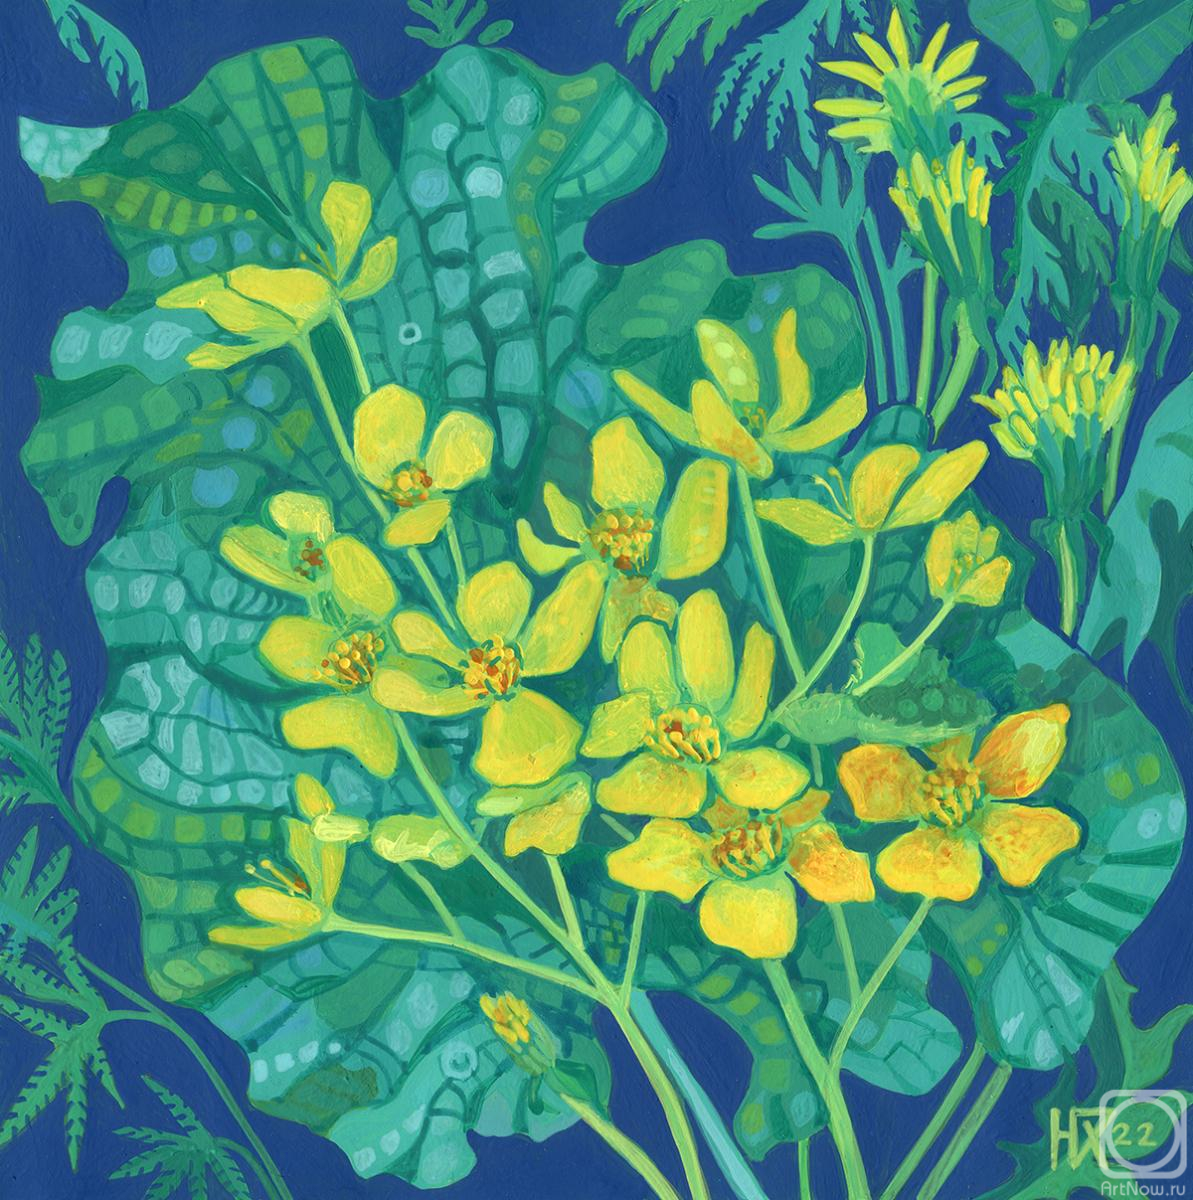 Horoshih Yuliya. Marsh Marigold Summer Wildflowers Floral Painting